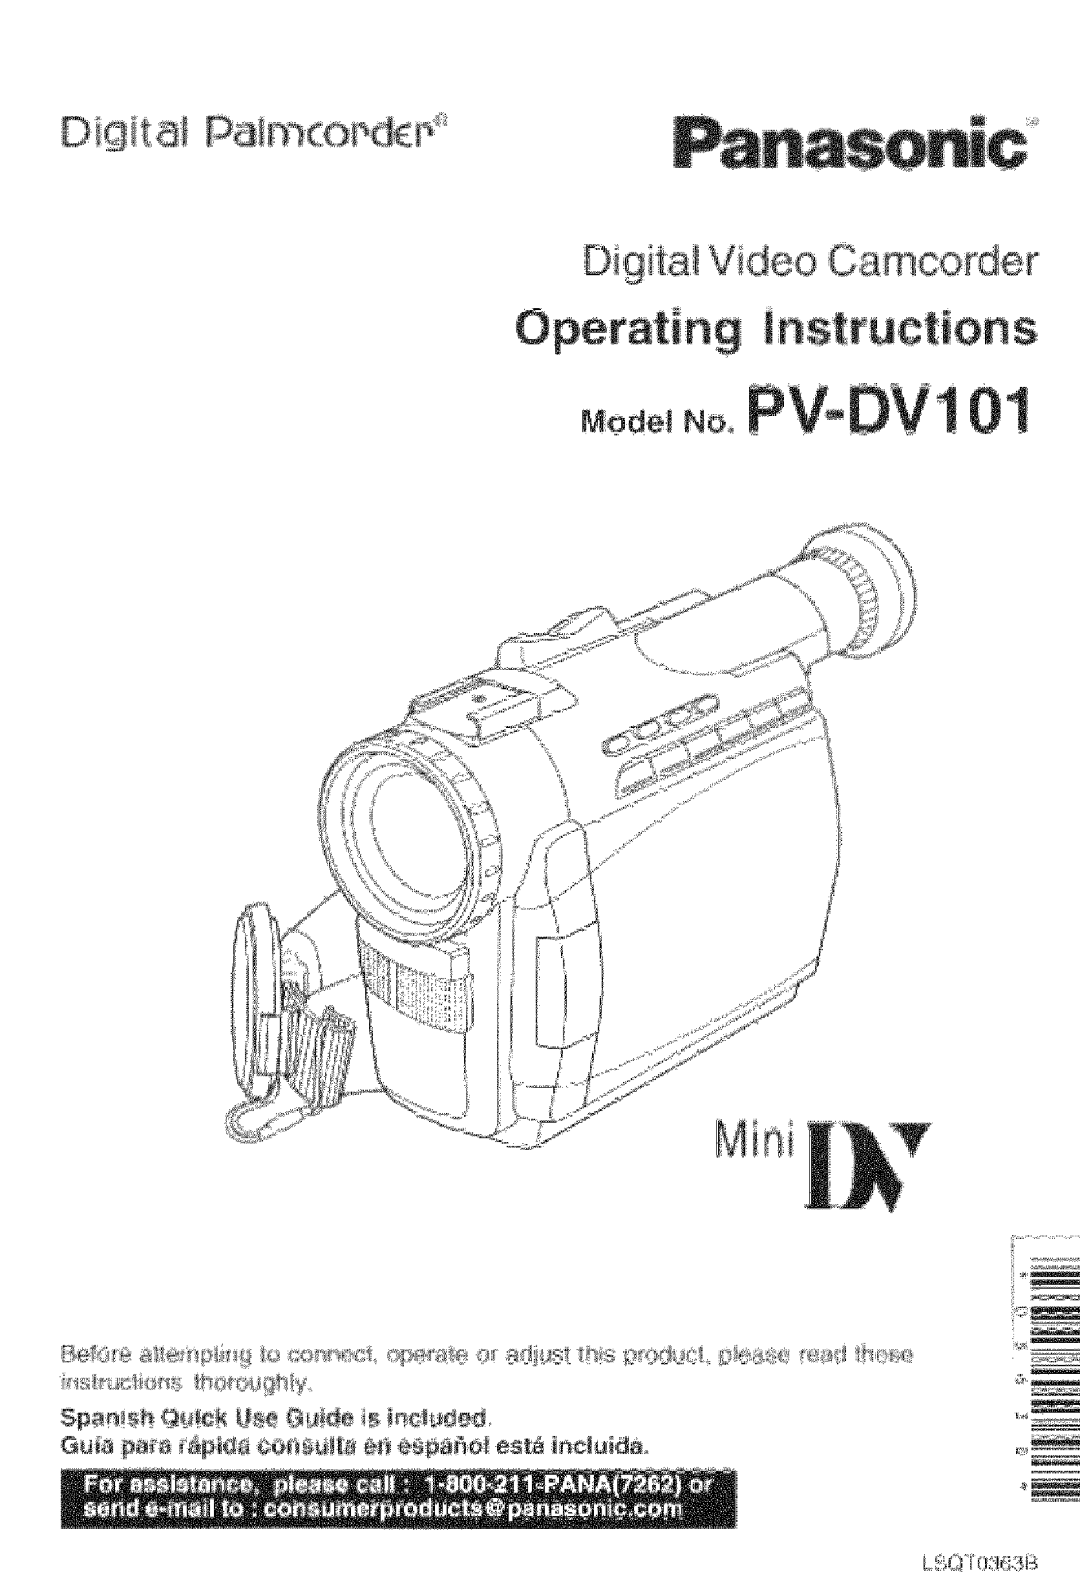 Panasonic PV-DV101 manual Digita Palmol dp 